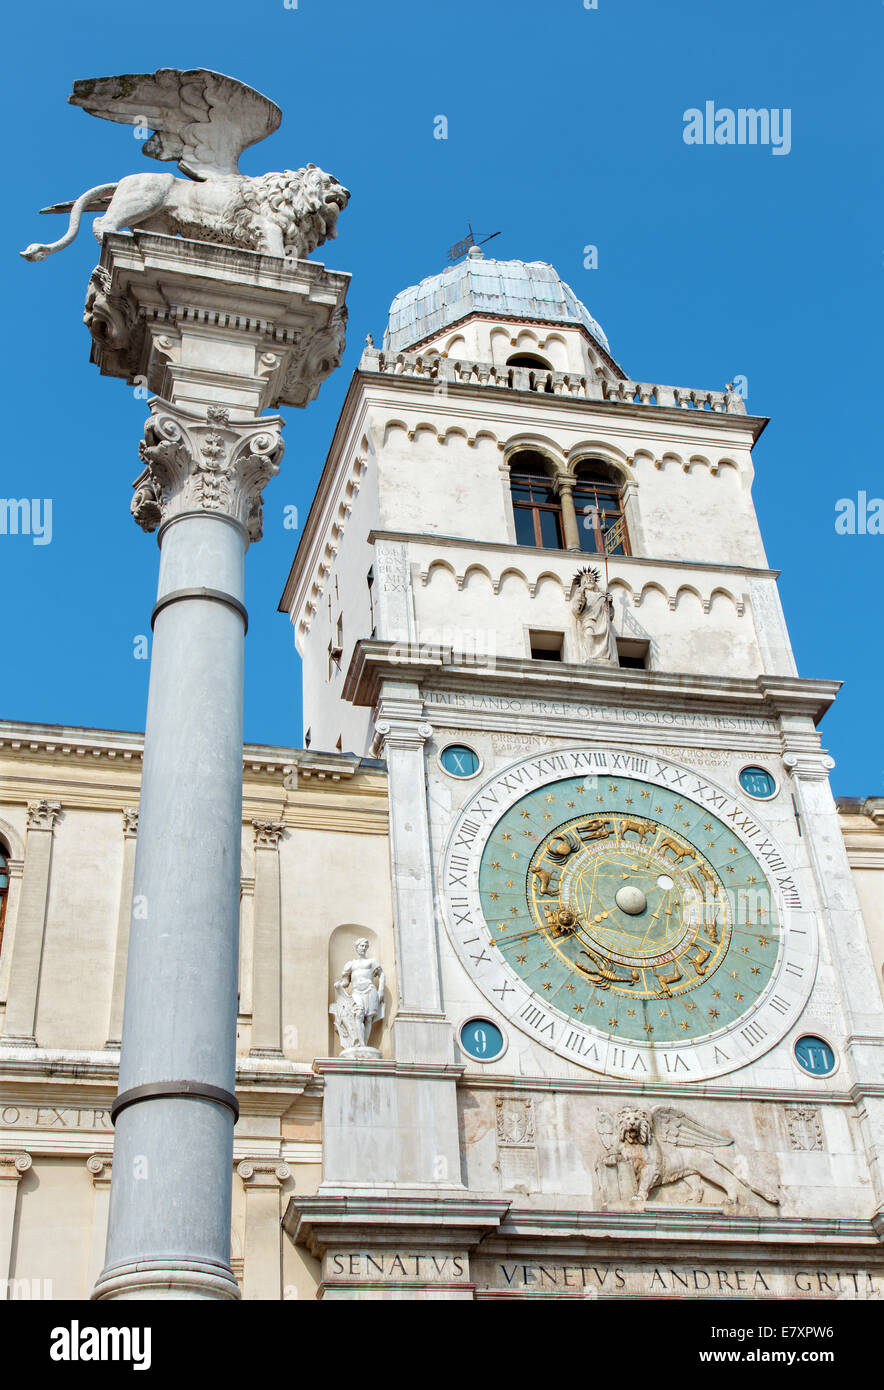 PADUA, ITALY - SEPTEMBER 9, 2014: Piazza dei Signori square and Torre del Orologio (astronomical clock tower) and st. Mark colum Stock Photo